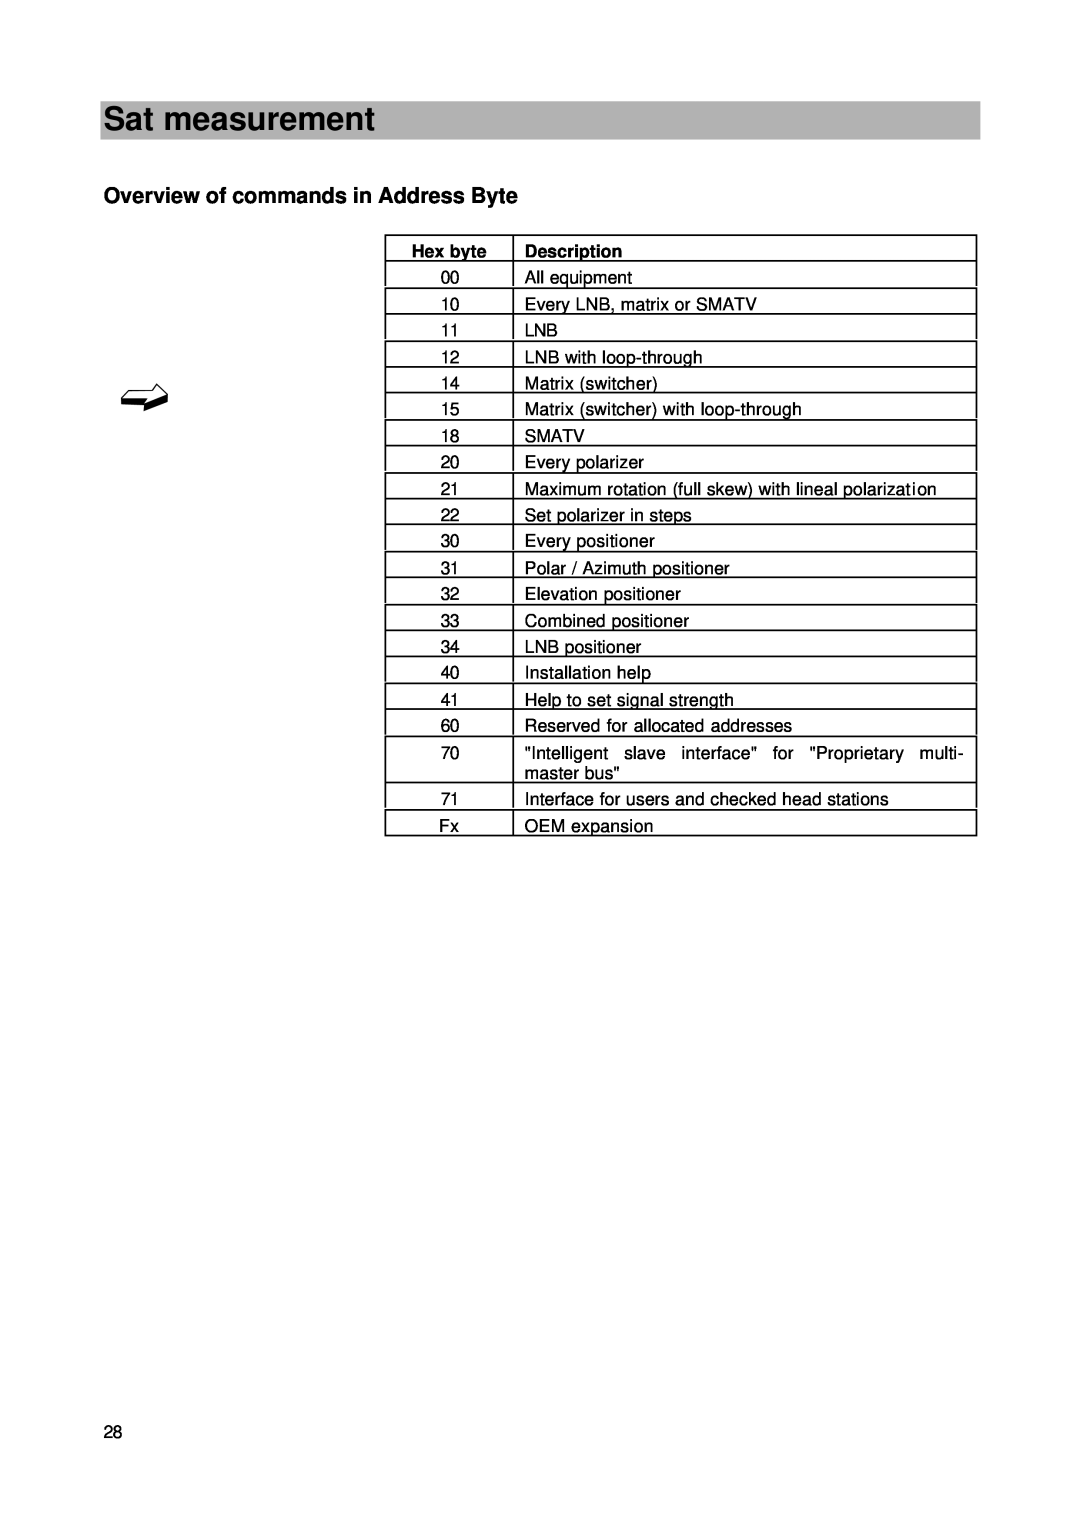 Kathrein MSK 24 manual Overview of commands in Address Byte, Sat measurement 